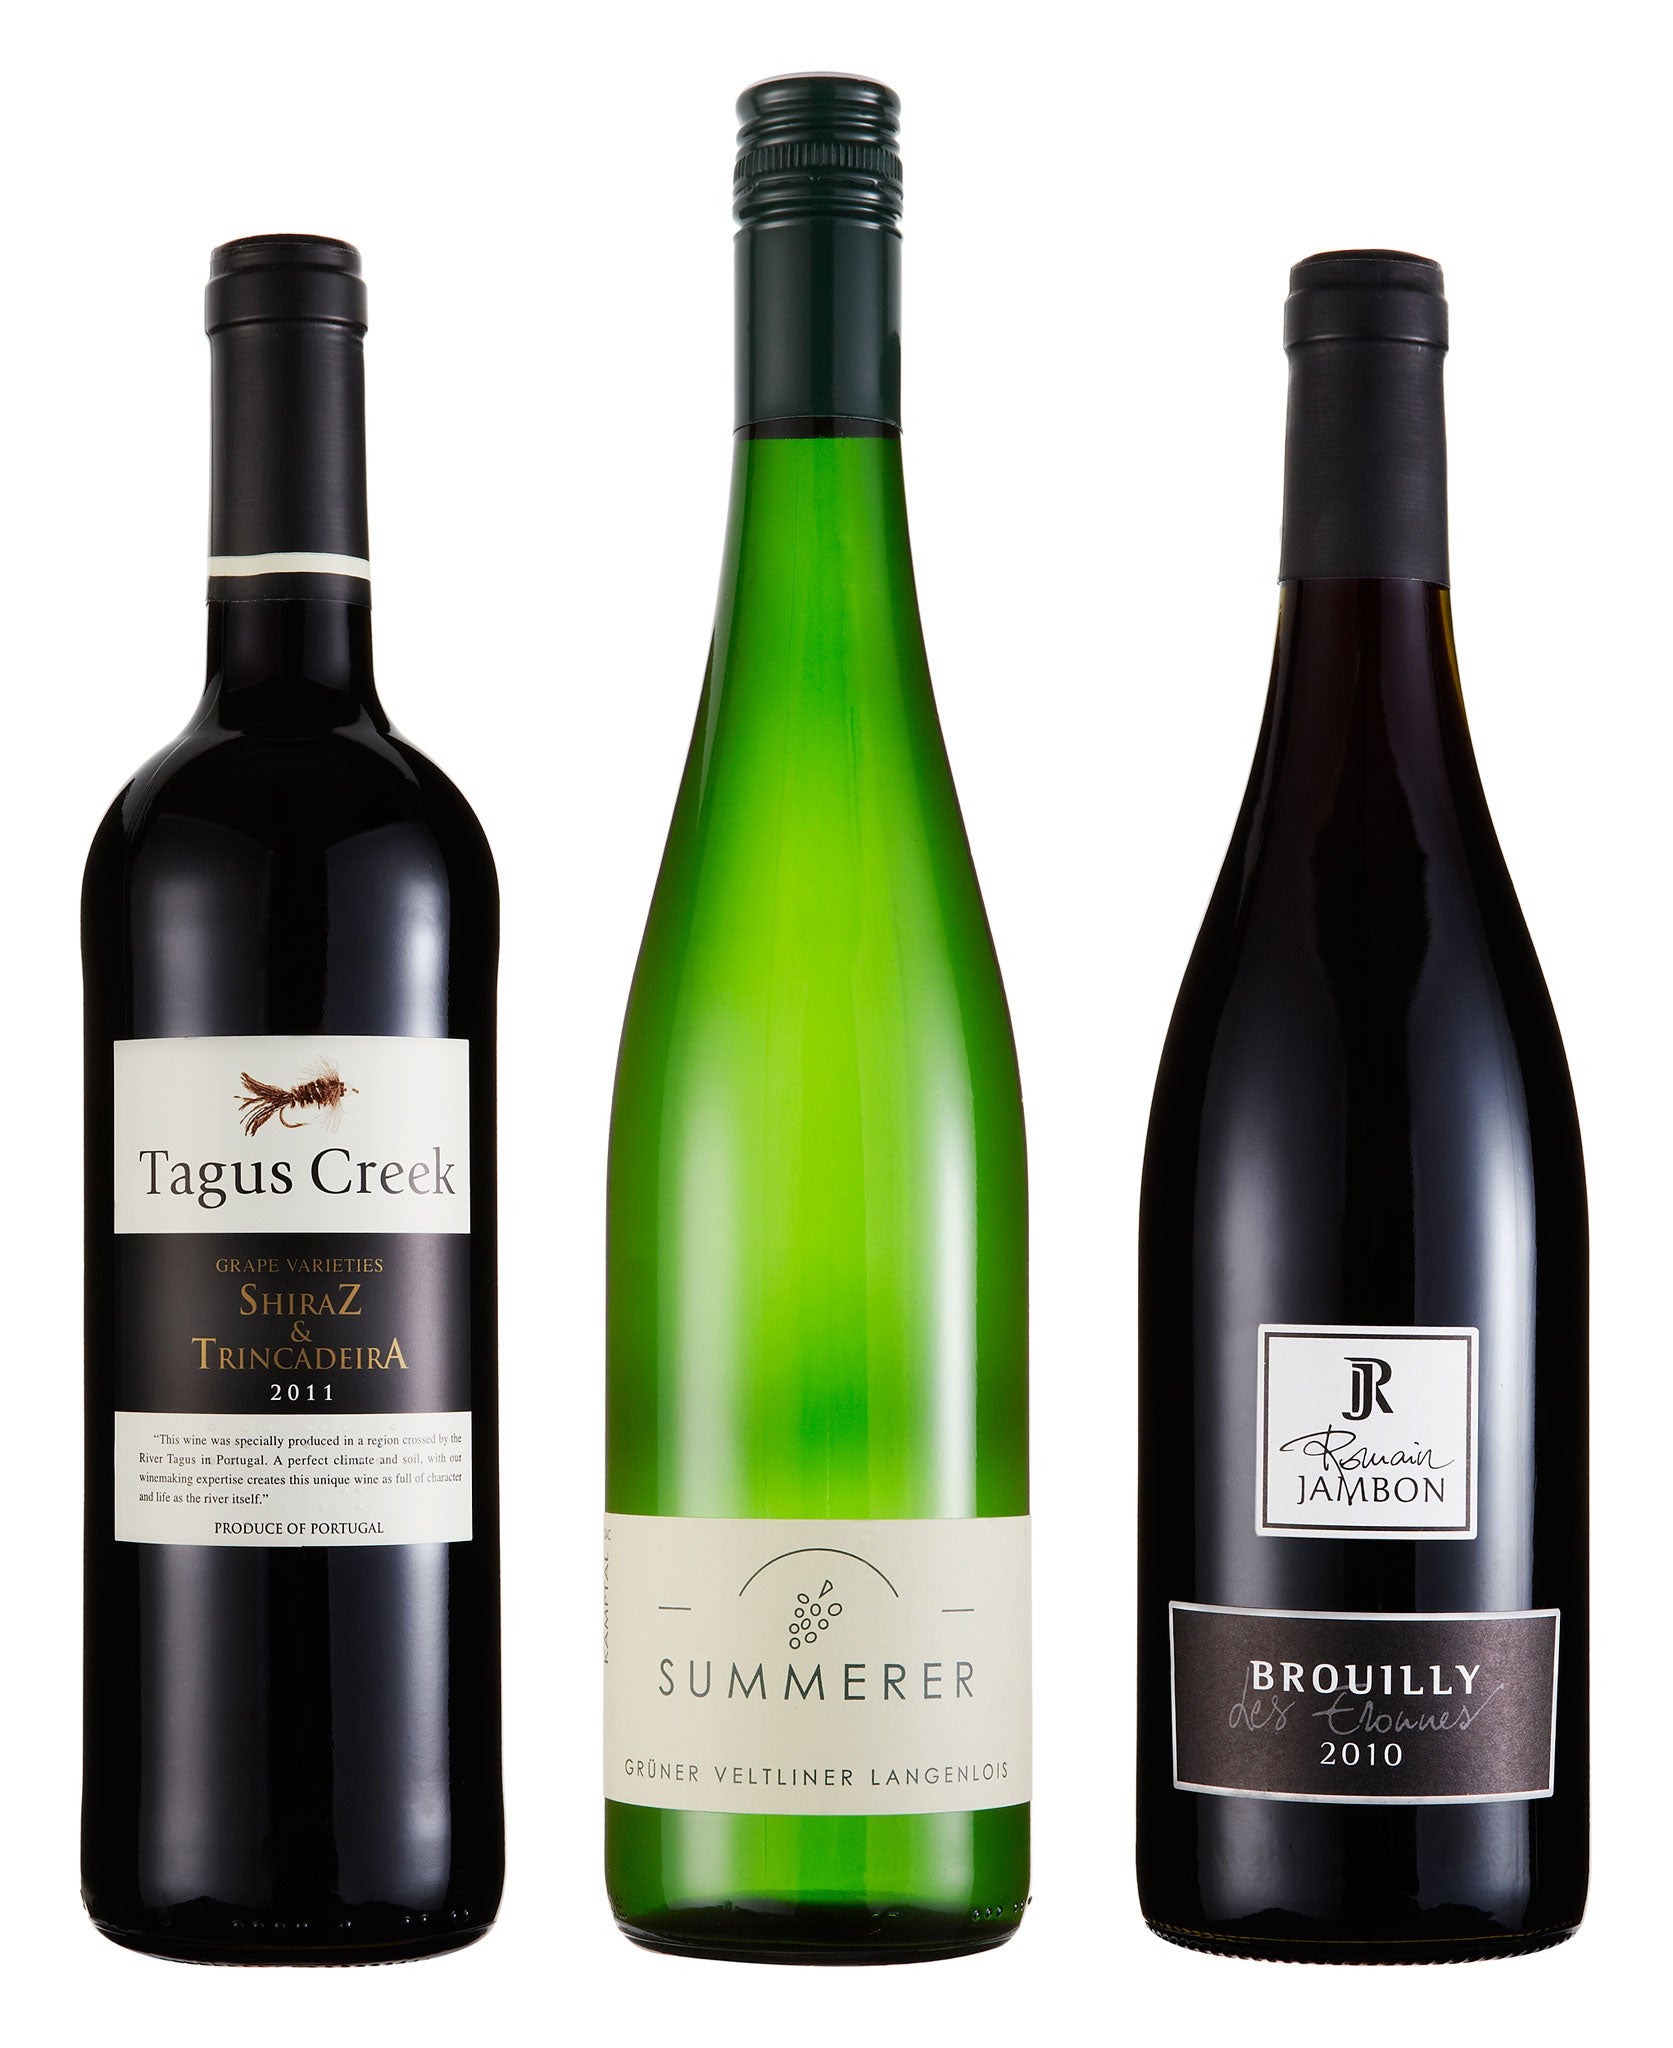 Brouilly Les Eronnes, Romain Jambon 2010; Weingut Summerer Gruner Veltliner 2011; Tagus Creek Shiraz Tricandeira 2011